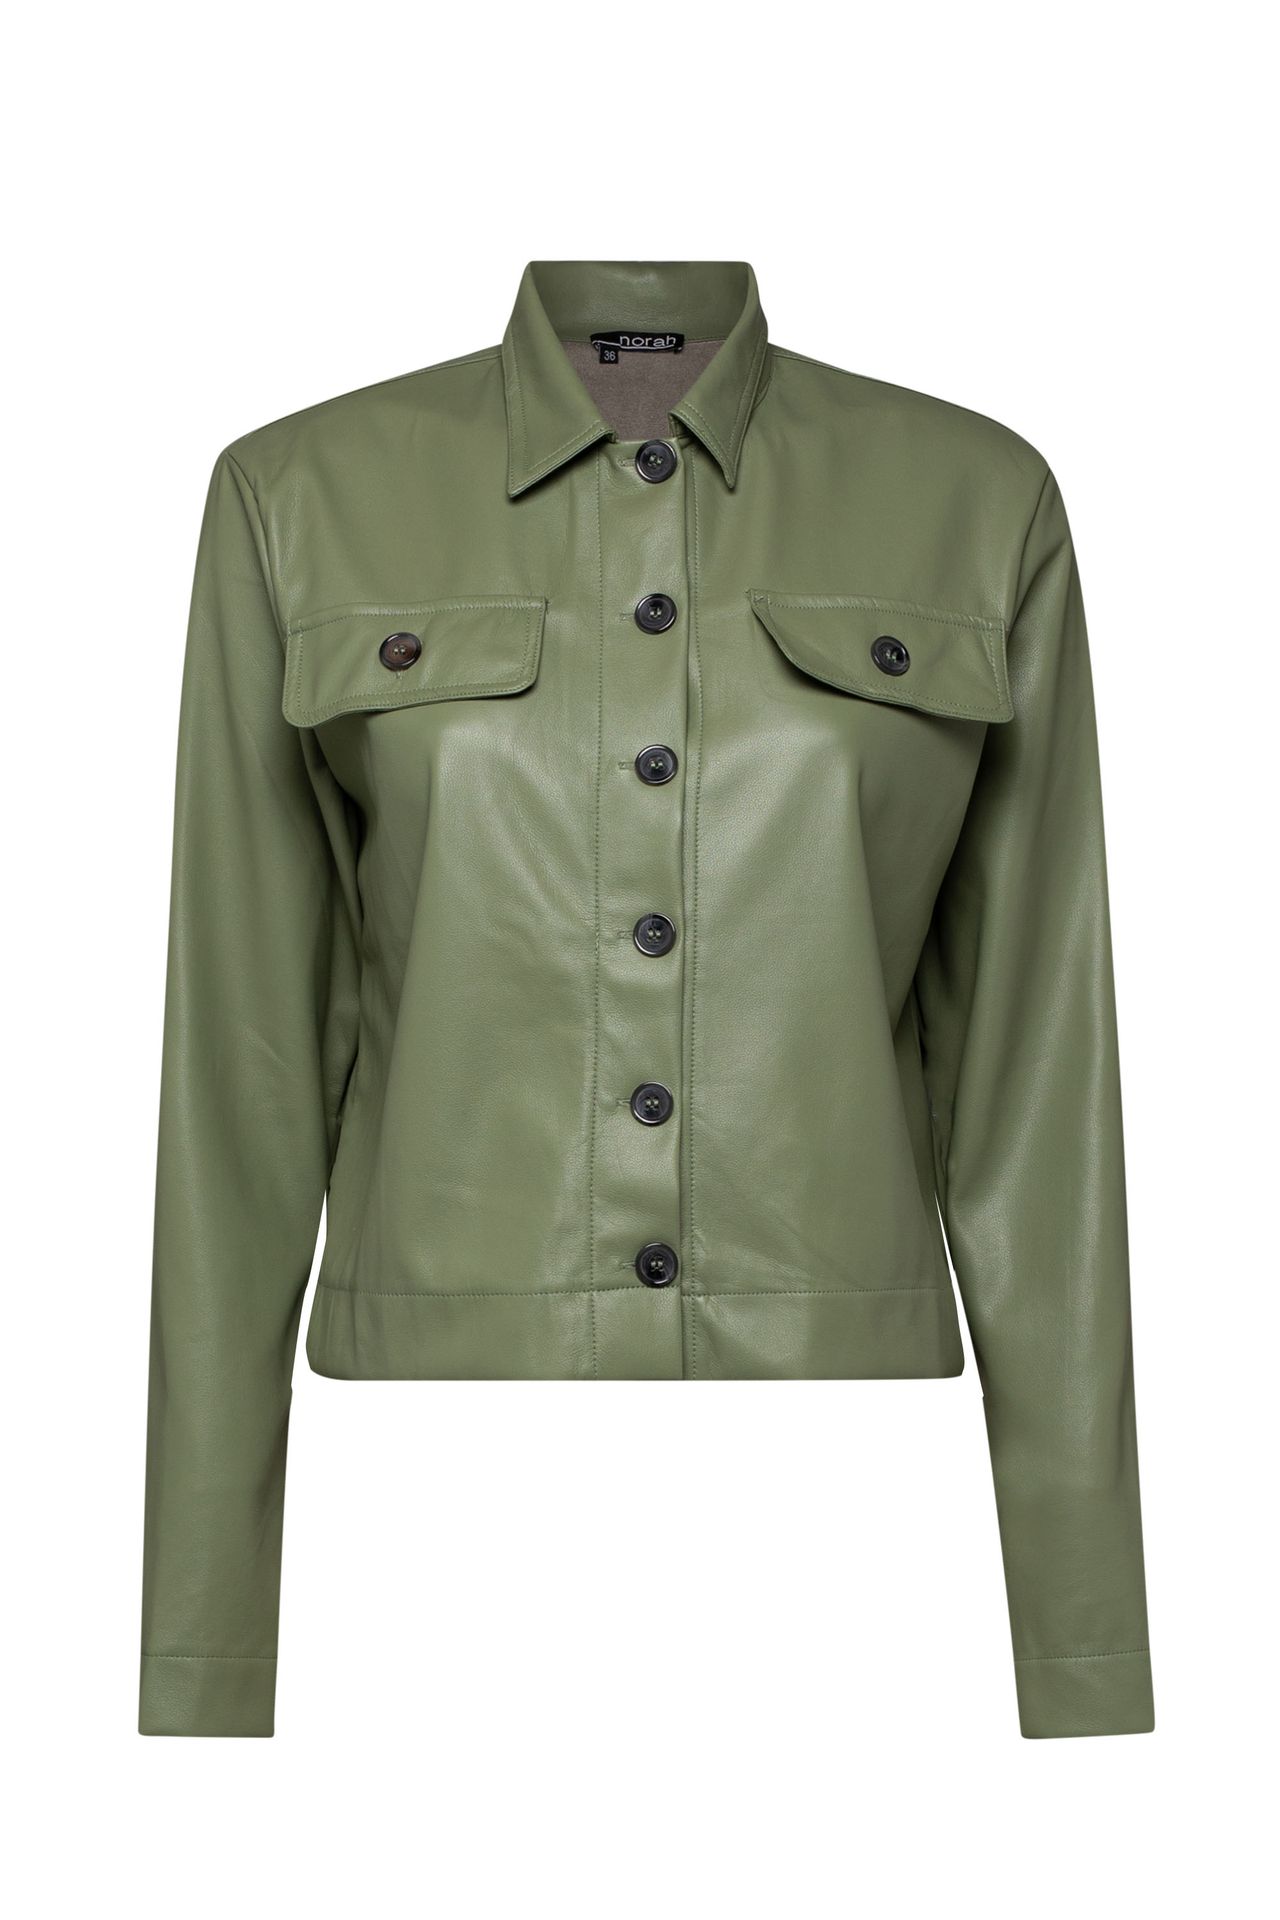 Norah Jacket groen PU olive green 212347-594